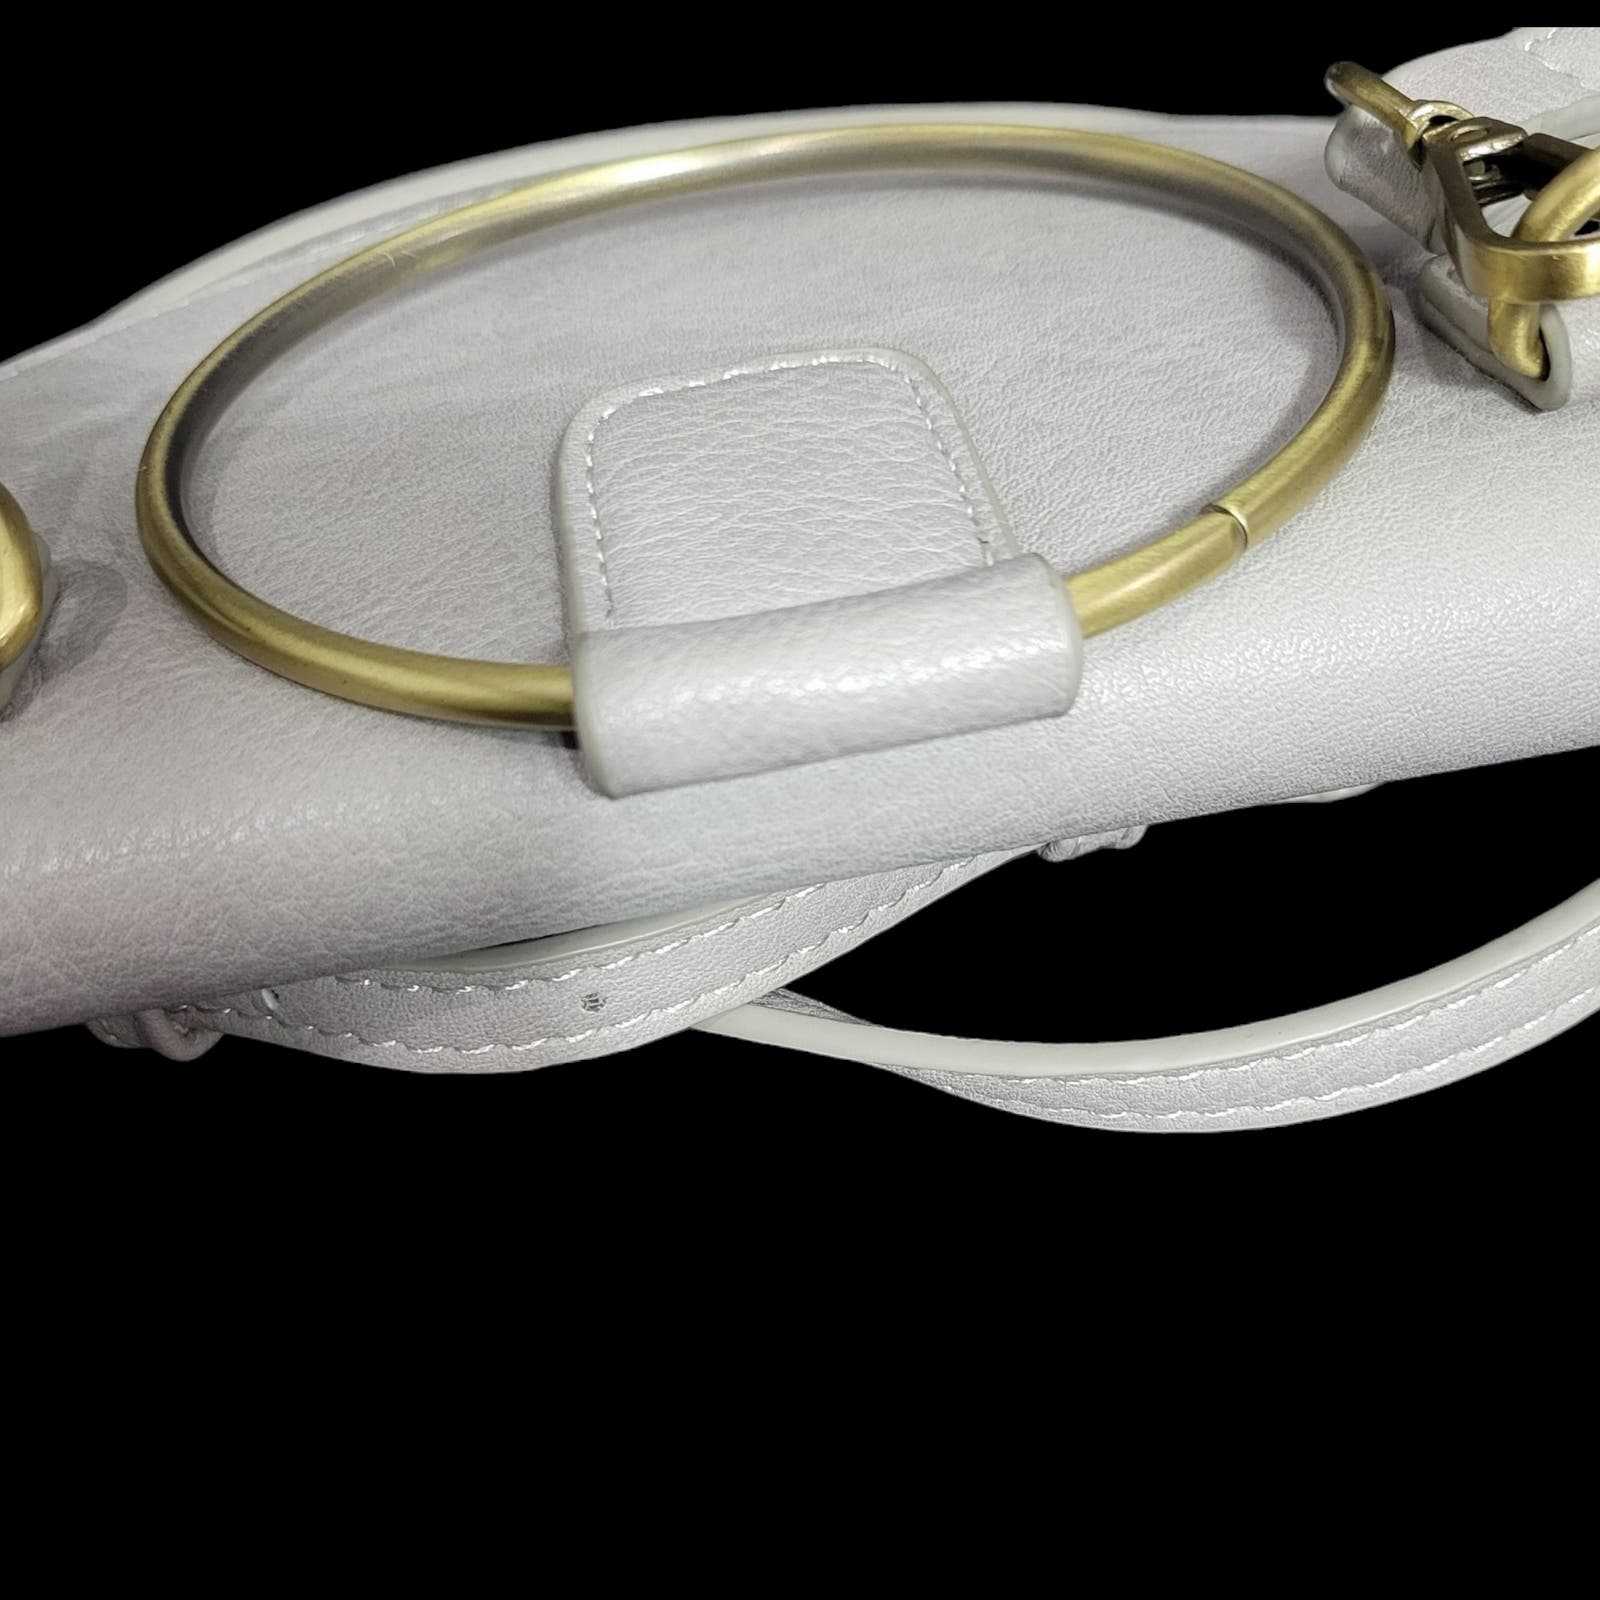 Anthropologie Veronica Ring Bag Grey Crossbody Slim Gold Metal Bracelet Rolled Handle Half Moon Small